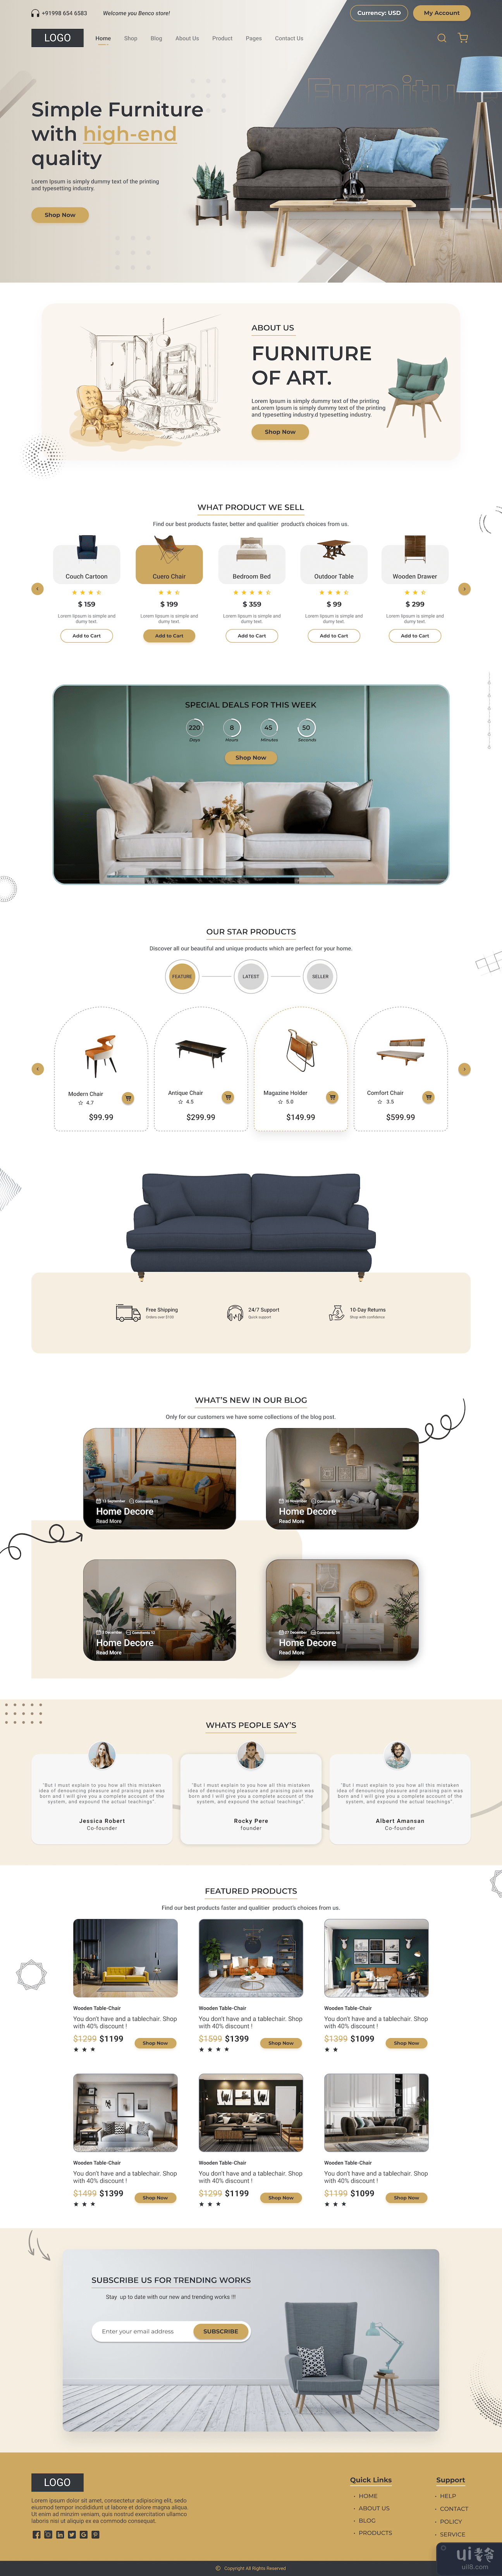 家具店登陆页面设计(Furniture Shop Landing Page Design)插图1